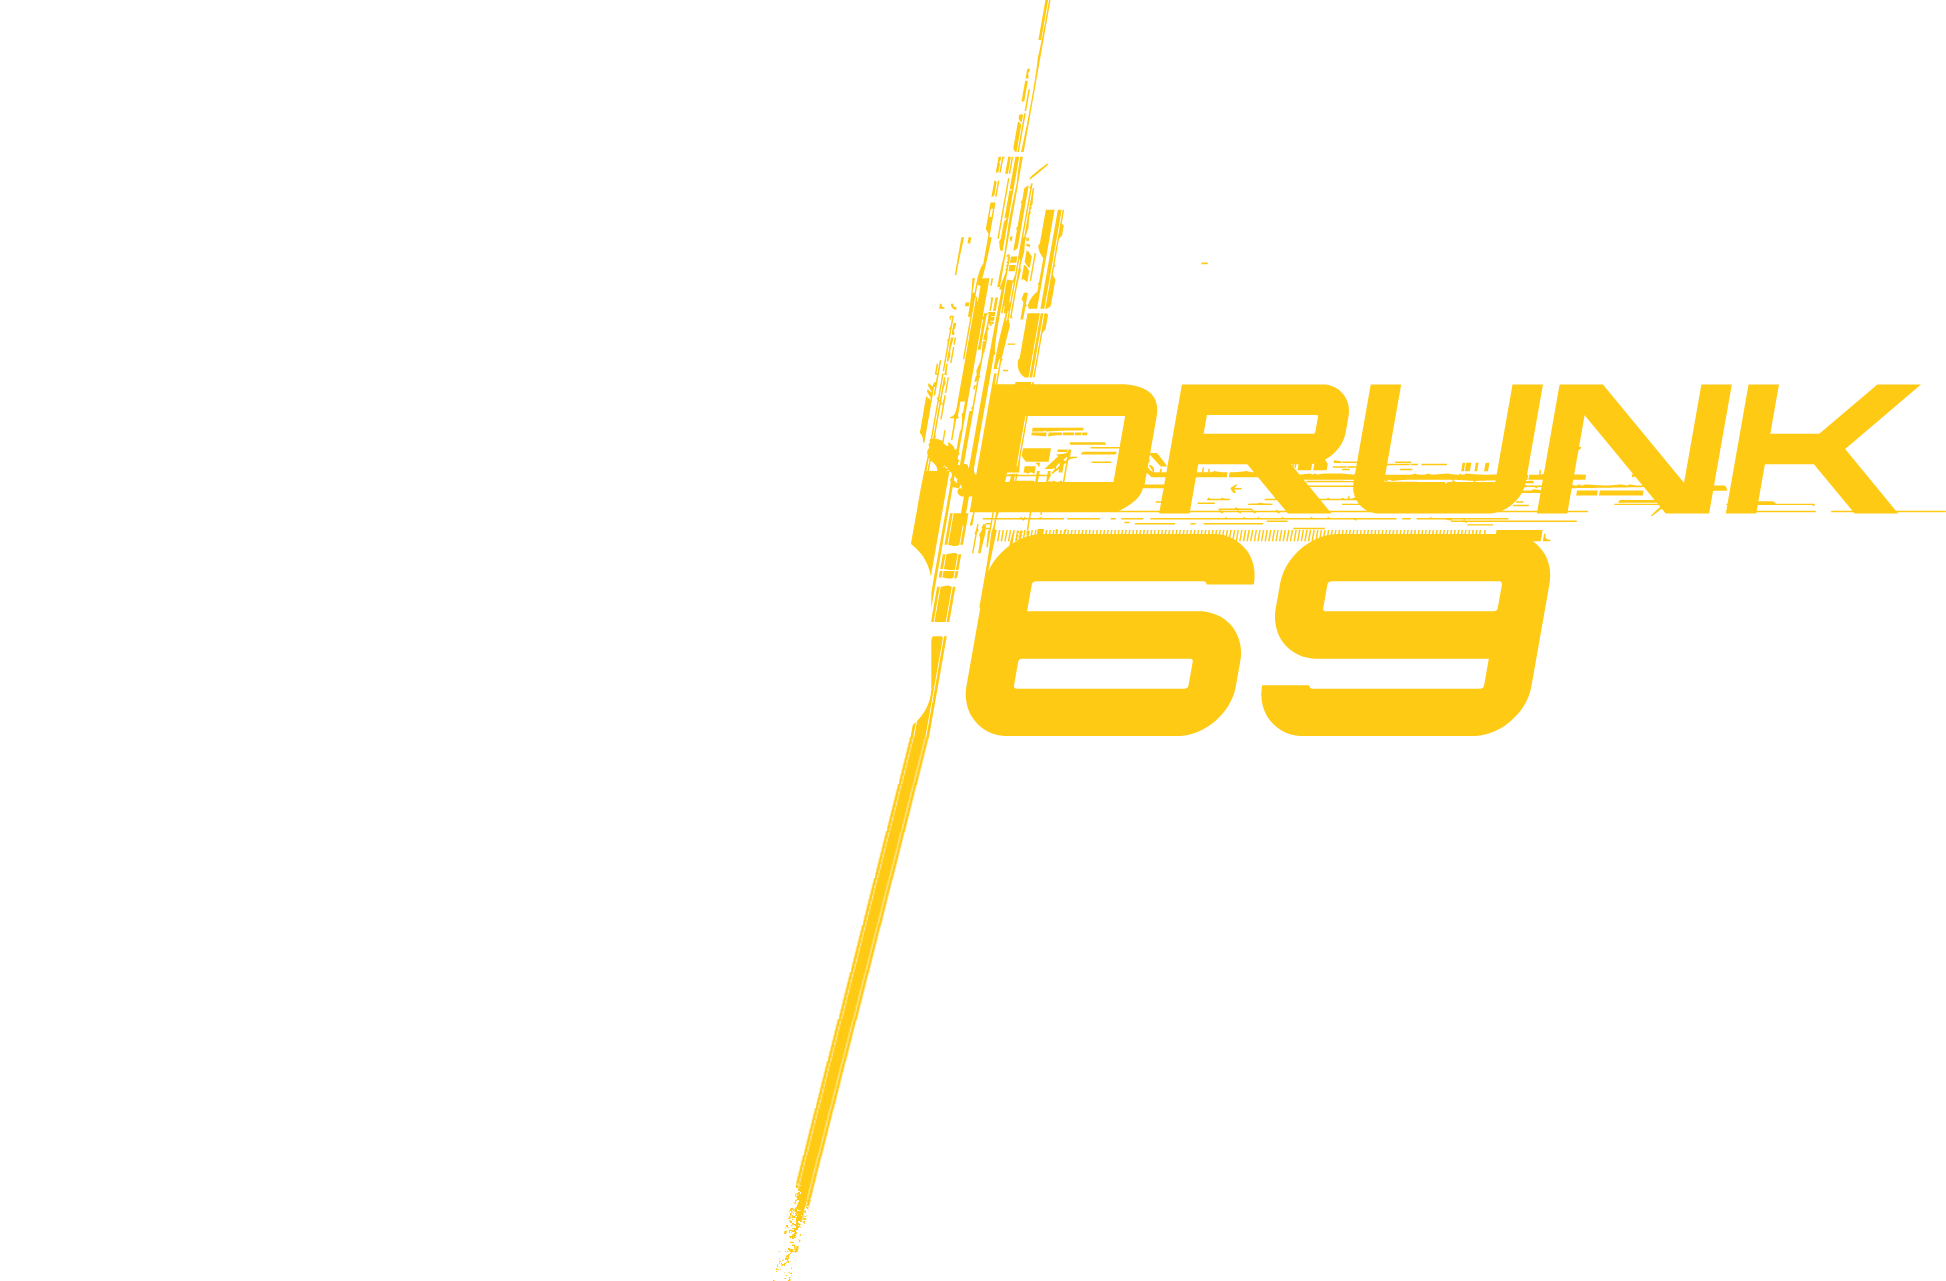 Cyberdrunk 2069